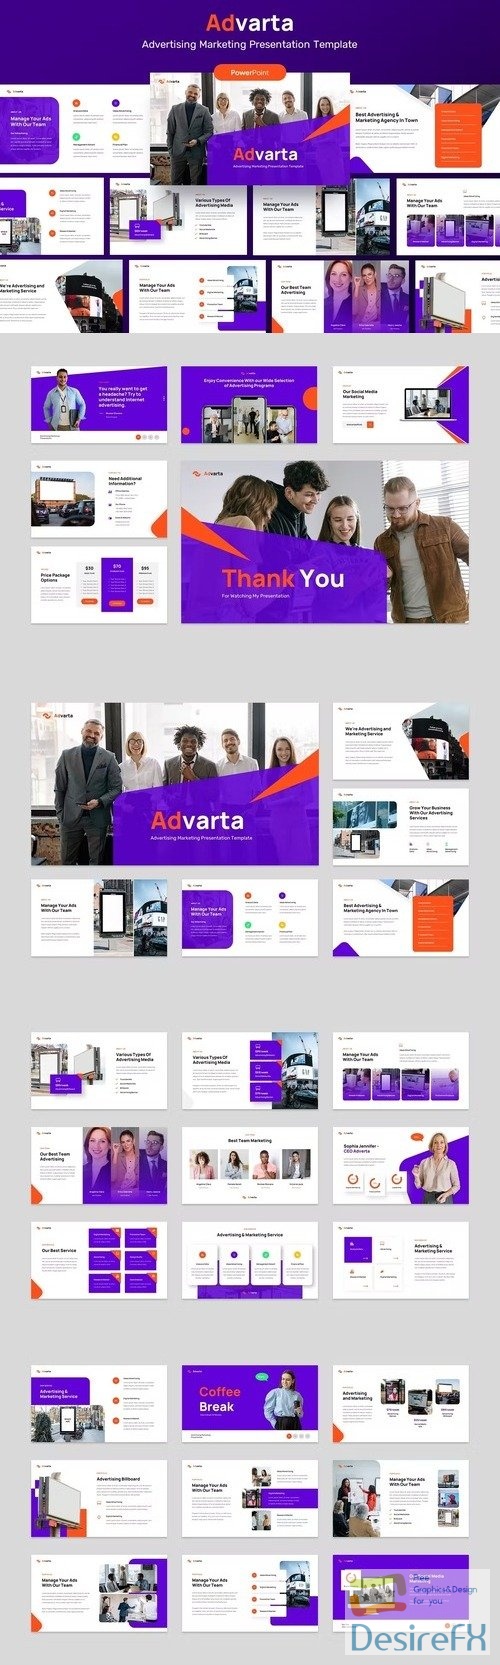 Advarta - Advertising Marketing PowerPoint